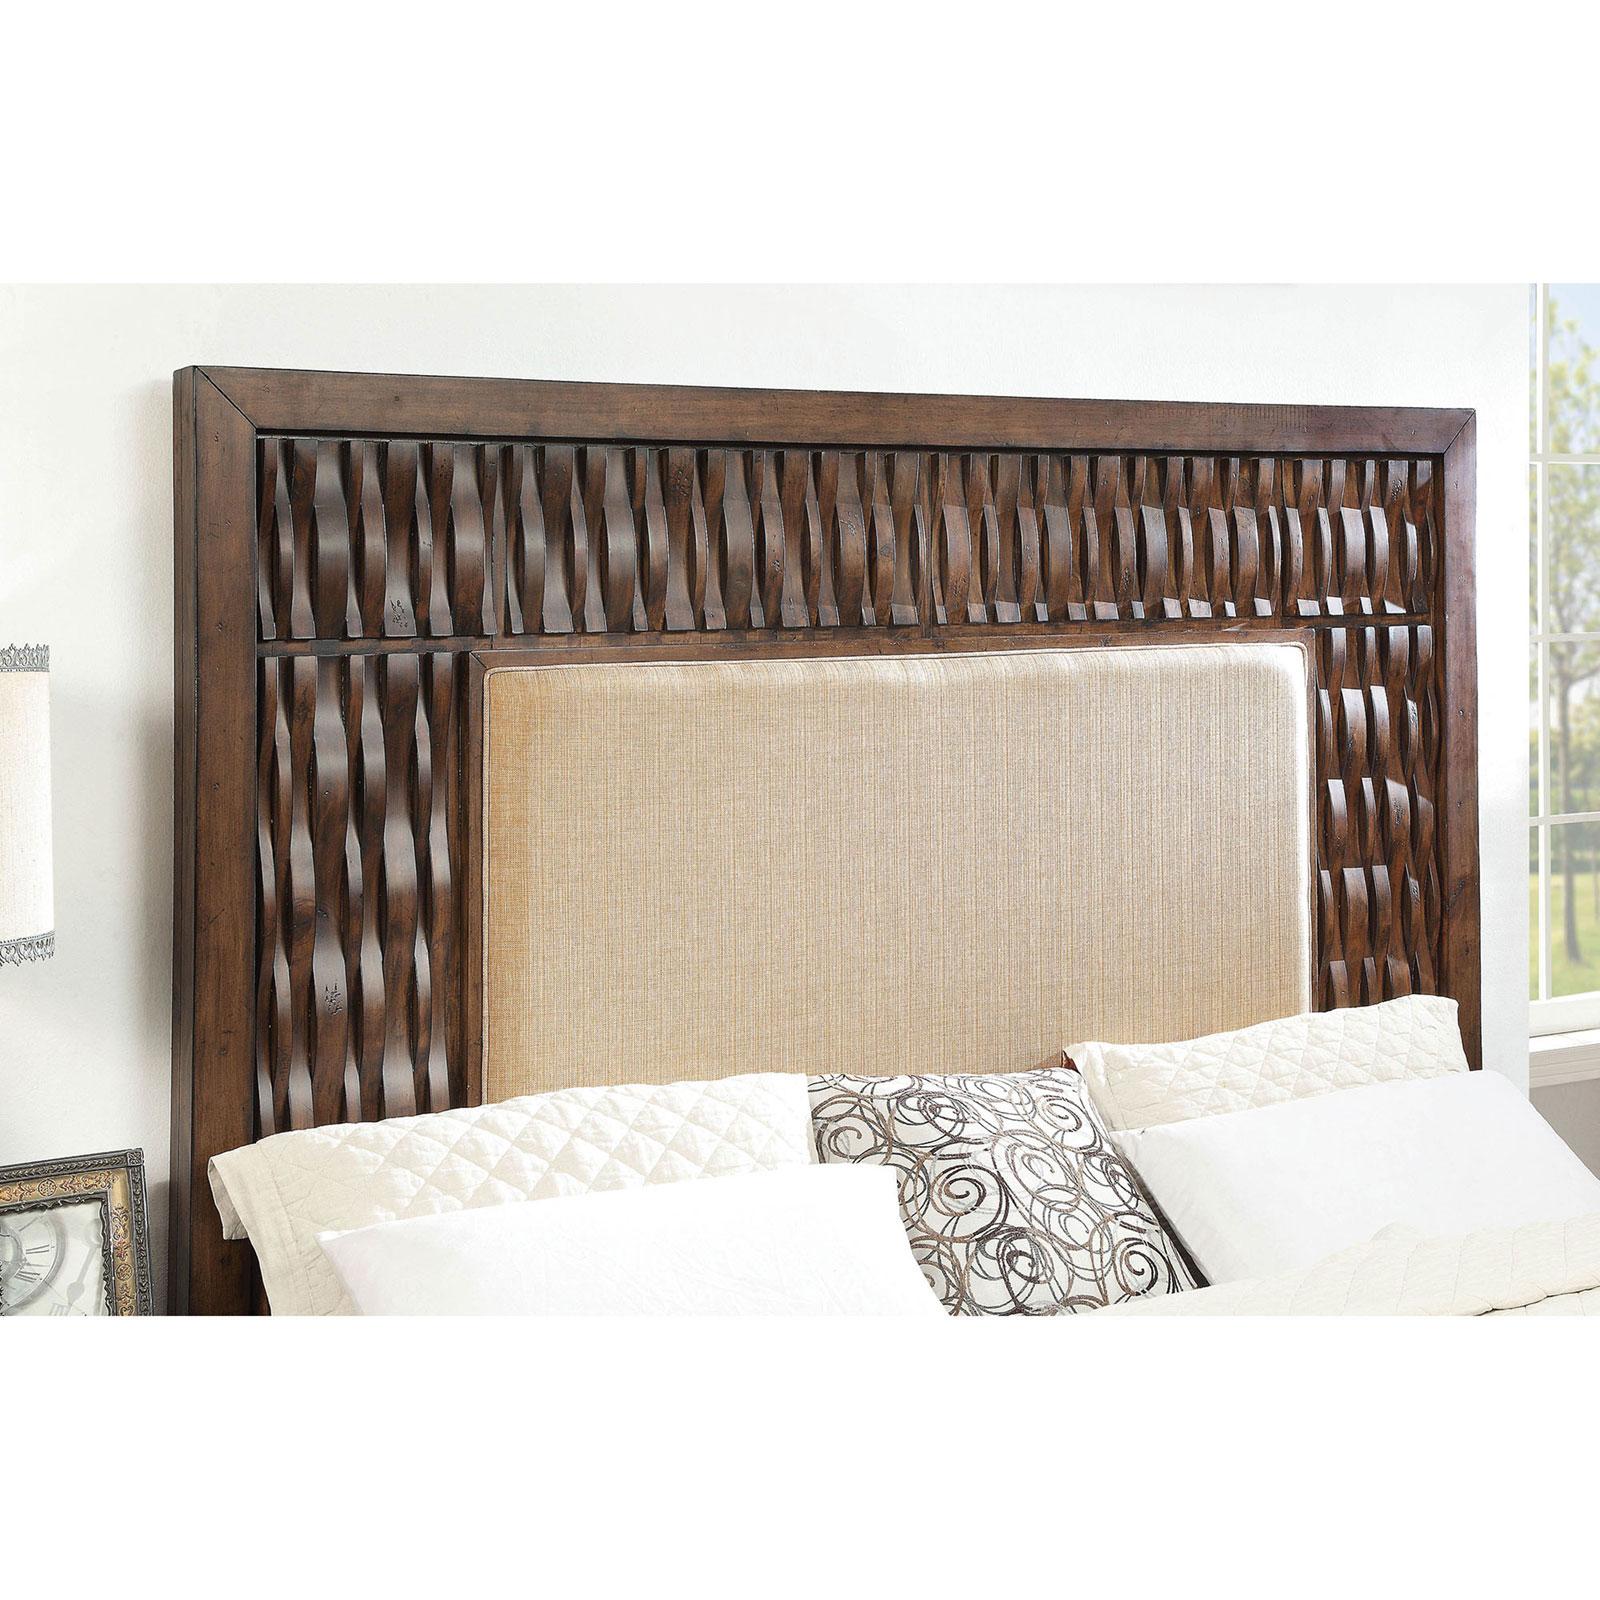 

    
Upholstered King Bedroom Set 4Pcs in Chestnut Eutropia by Furniture of America
